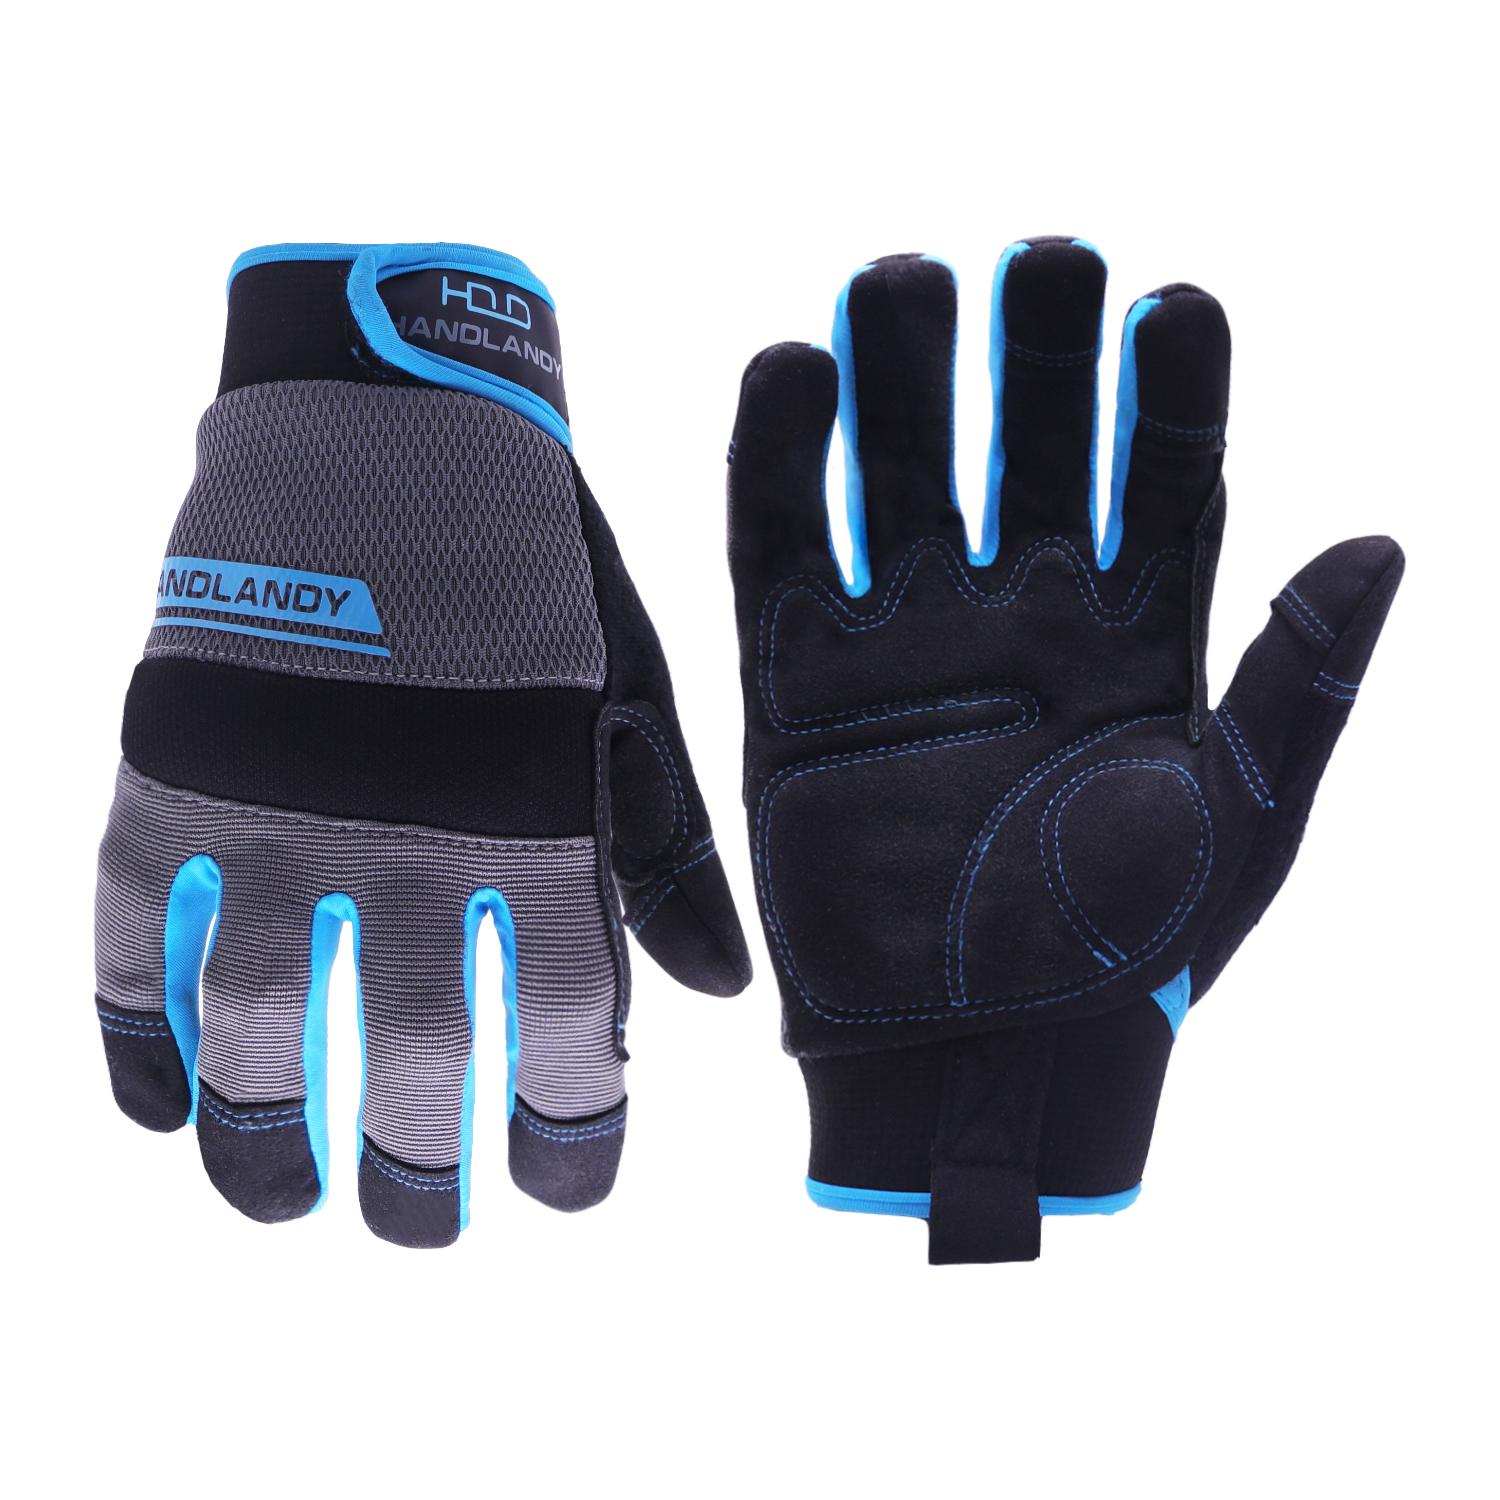 PRI Blue Vibration-Resistant mesh glove touchscreen working safety mechanic gloves for men 6035